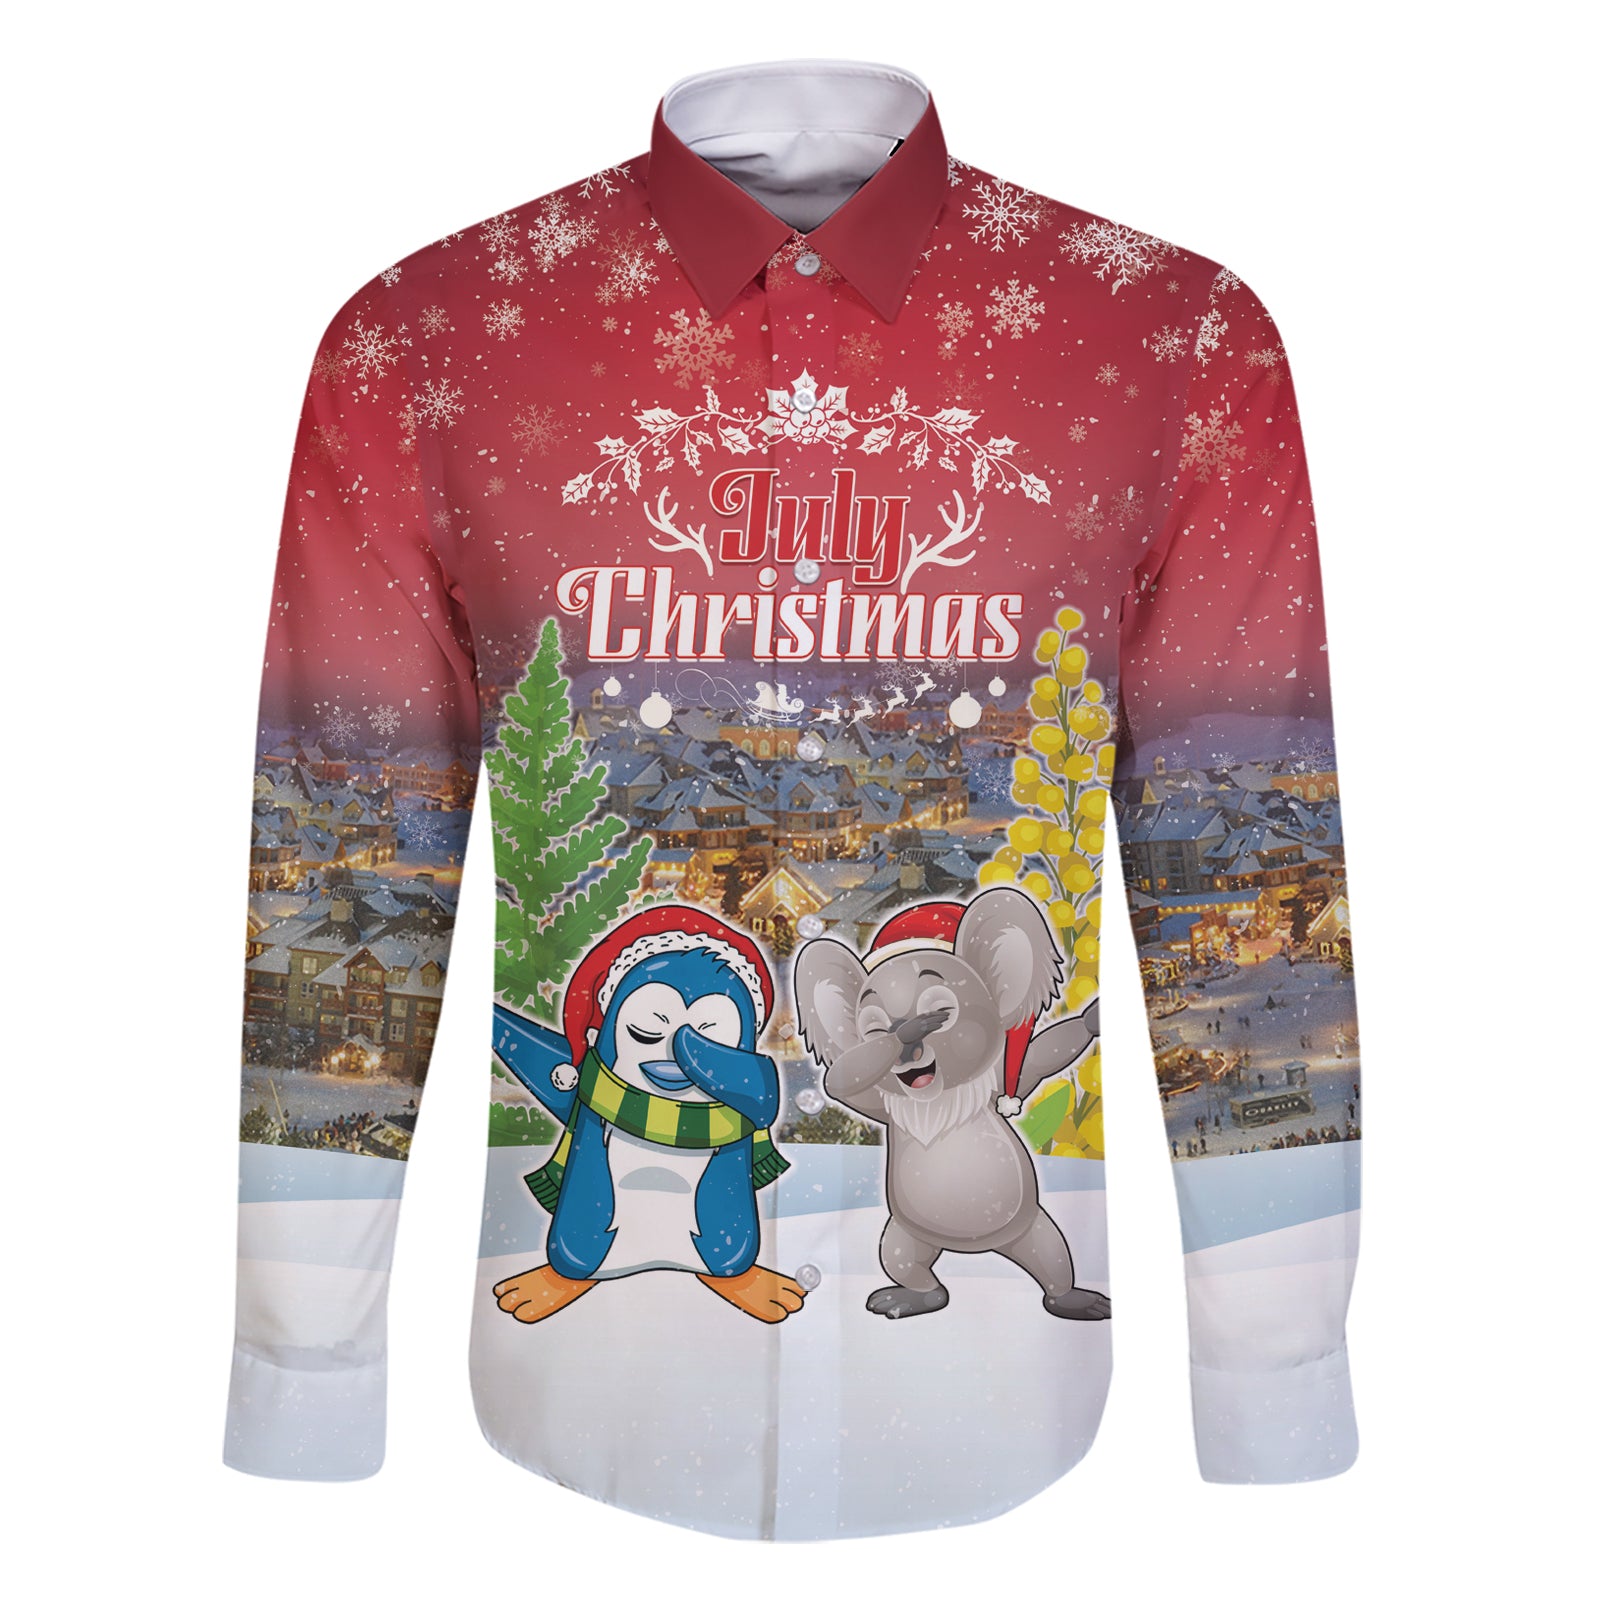 Personalised Christmas In July Family Matching Short Sleeve Bodycon Dress and Hawaiian Shirt Funny Dabbing Dance Koala And Blue Penguins